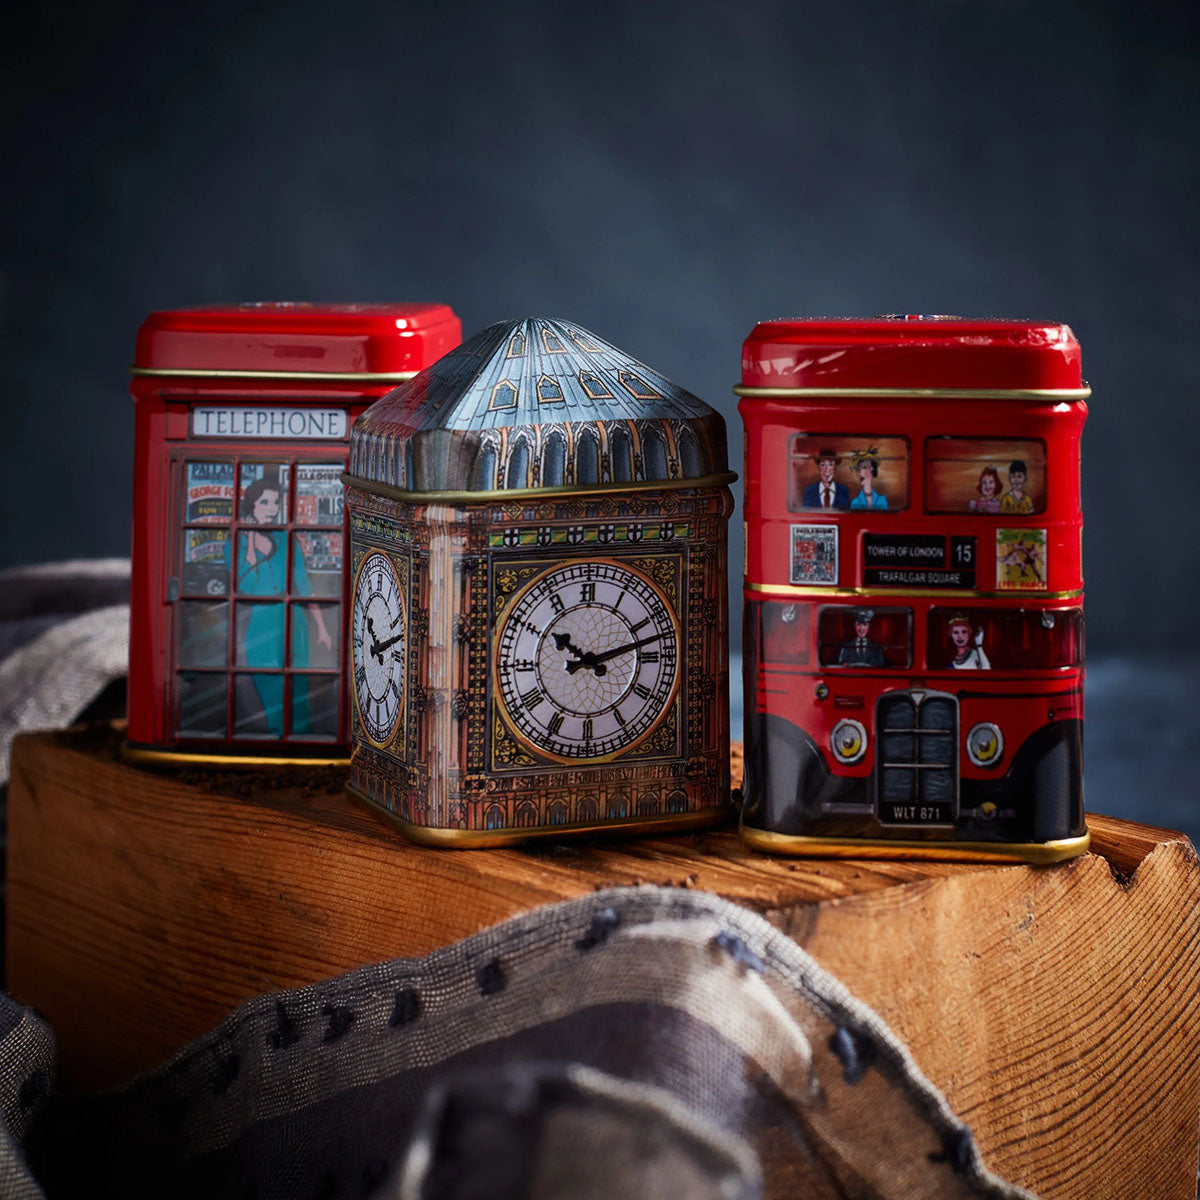 Traditions of London - Bus / Big Ben / Telephone - Loose Leaf Tea Gift Set 2